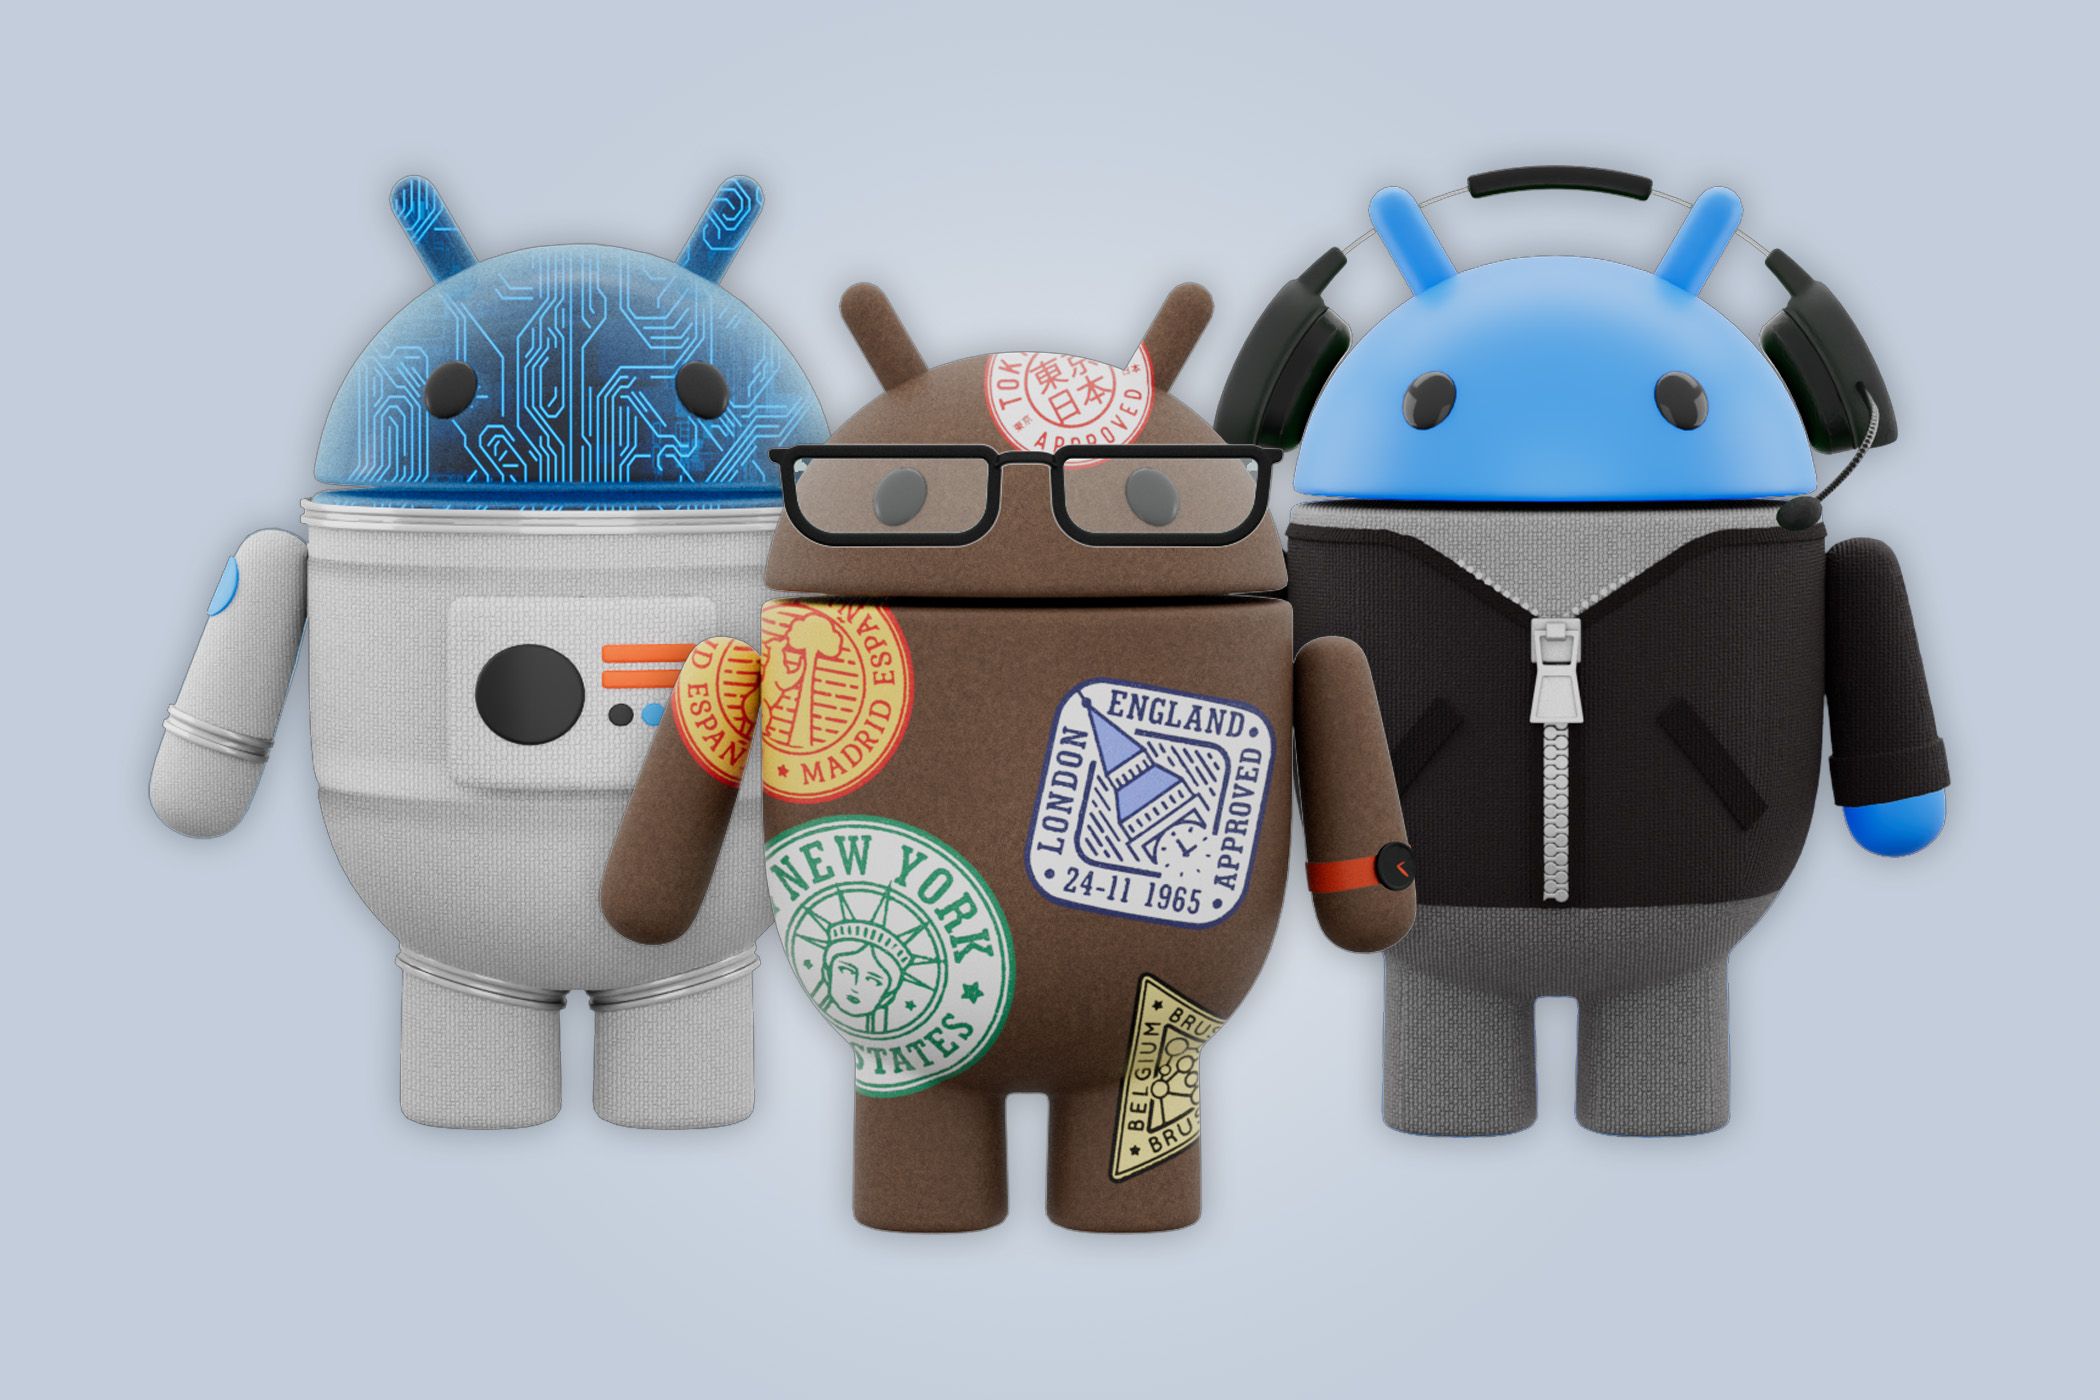 Three customized Android robots